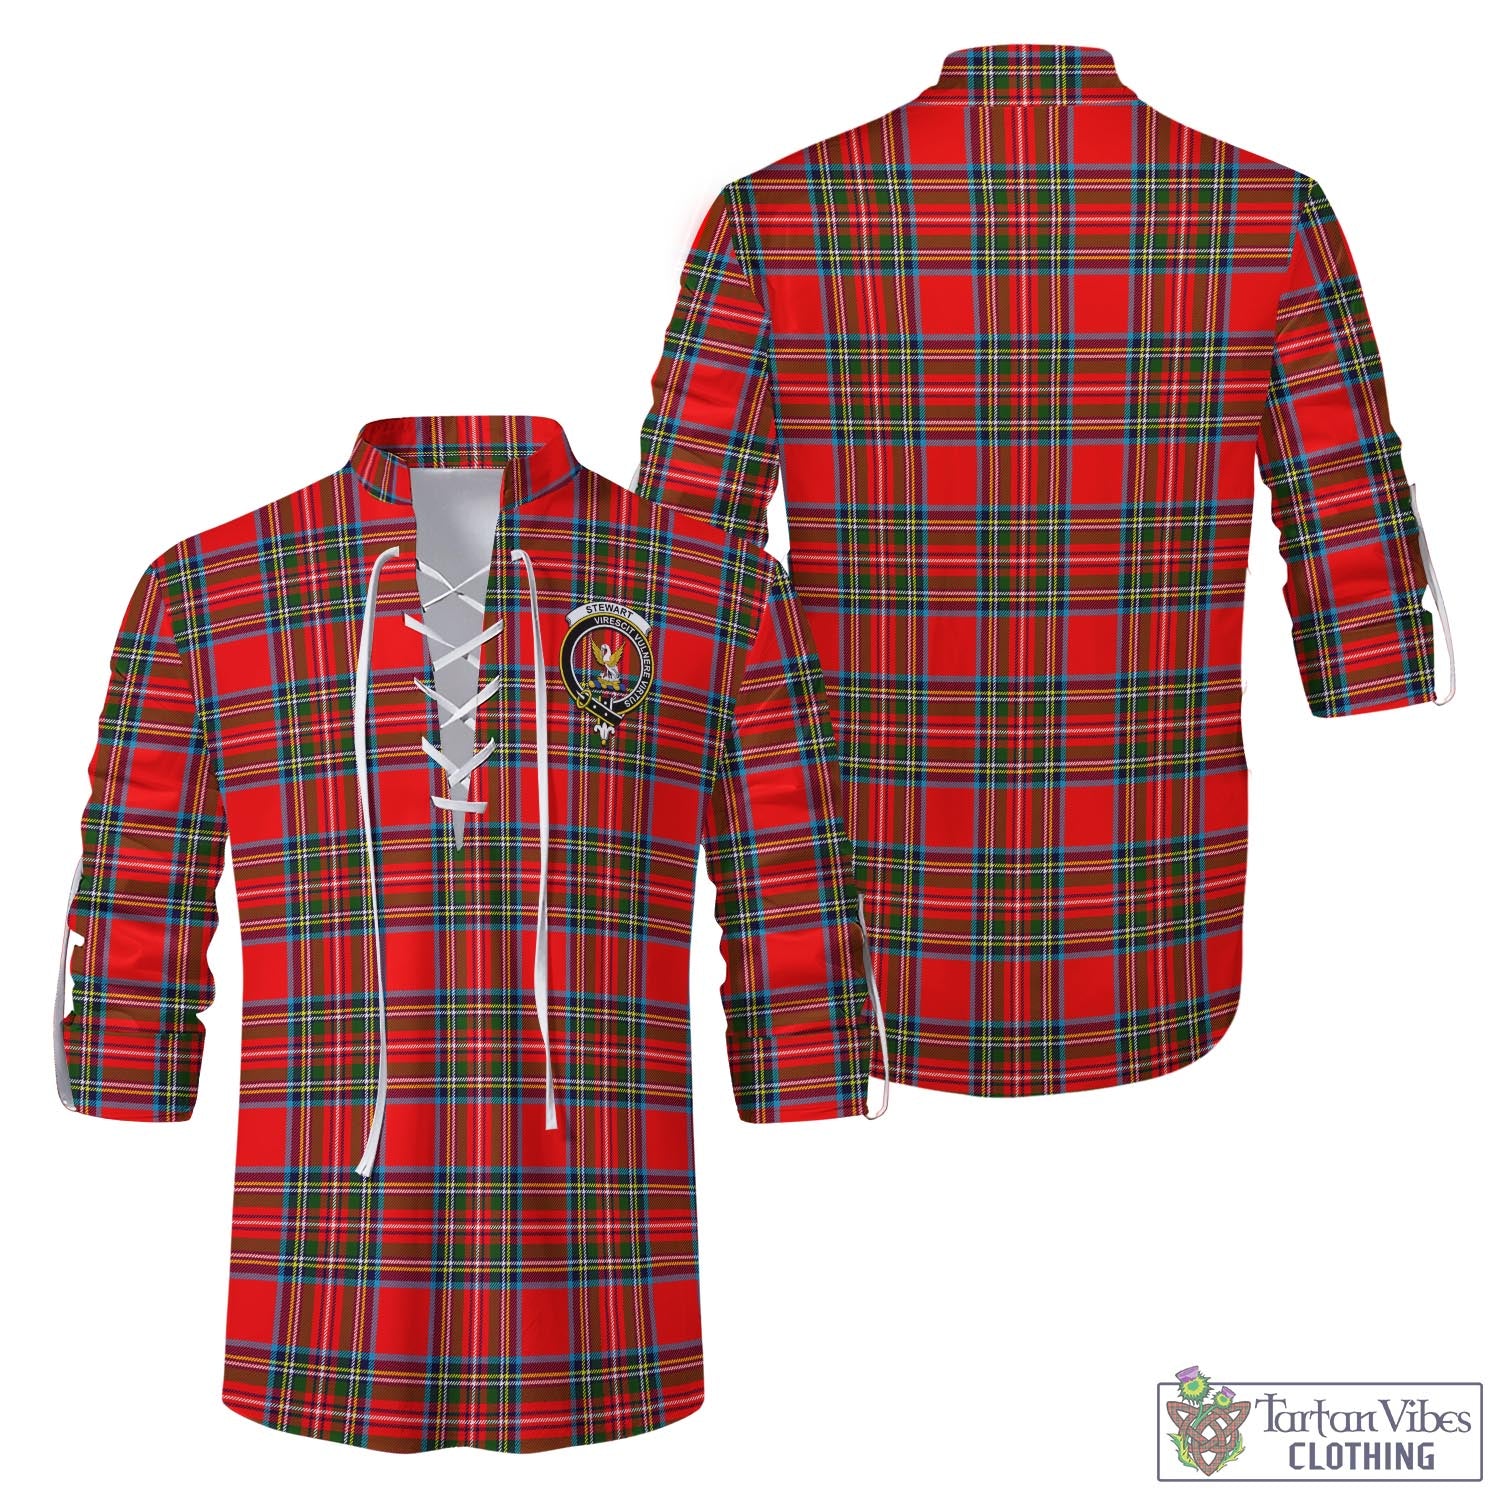 Tartan Vibes Clothing Stewart Royal Tartan Men's Scottish Traditional Jacobite Ghillie Kilt Shirt with Family Crest